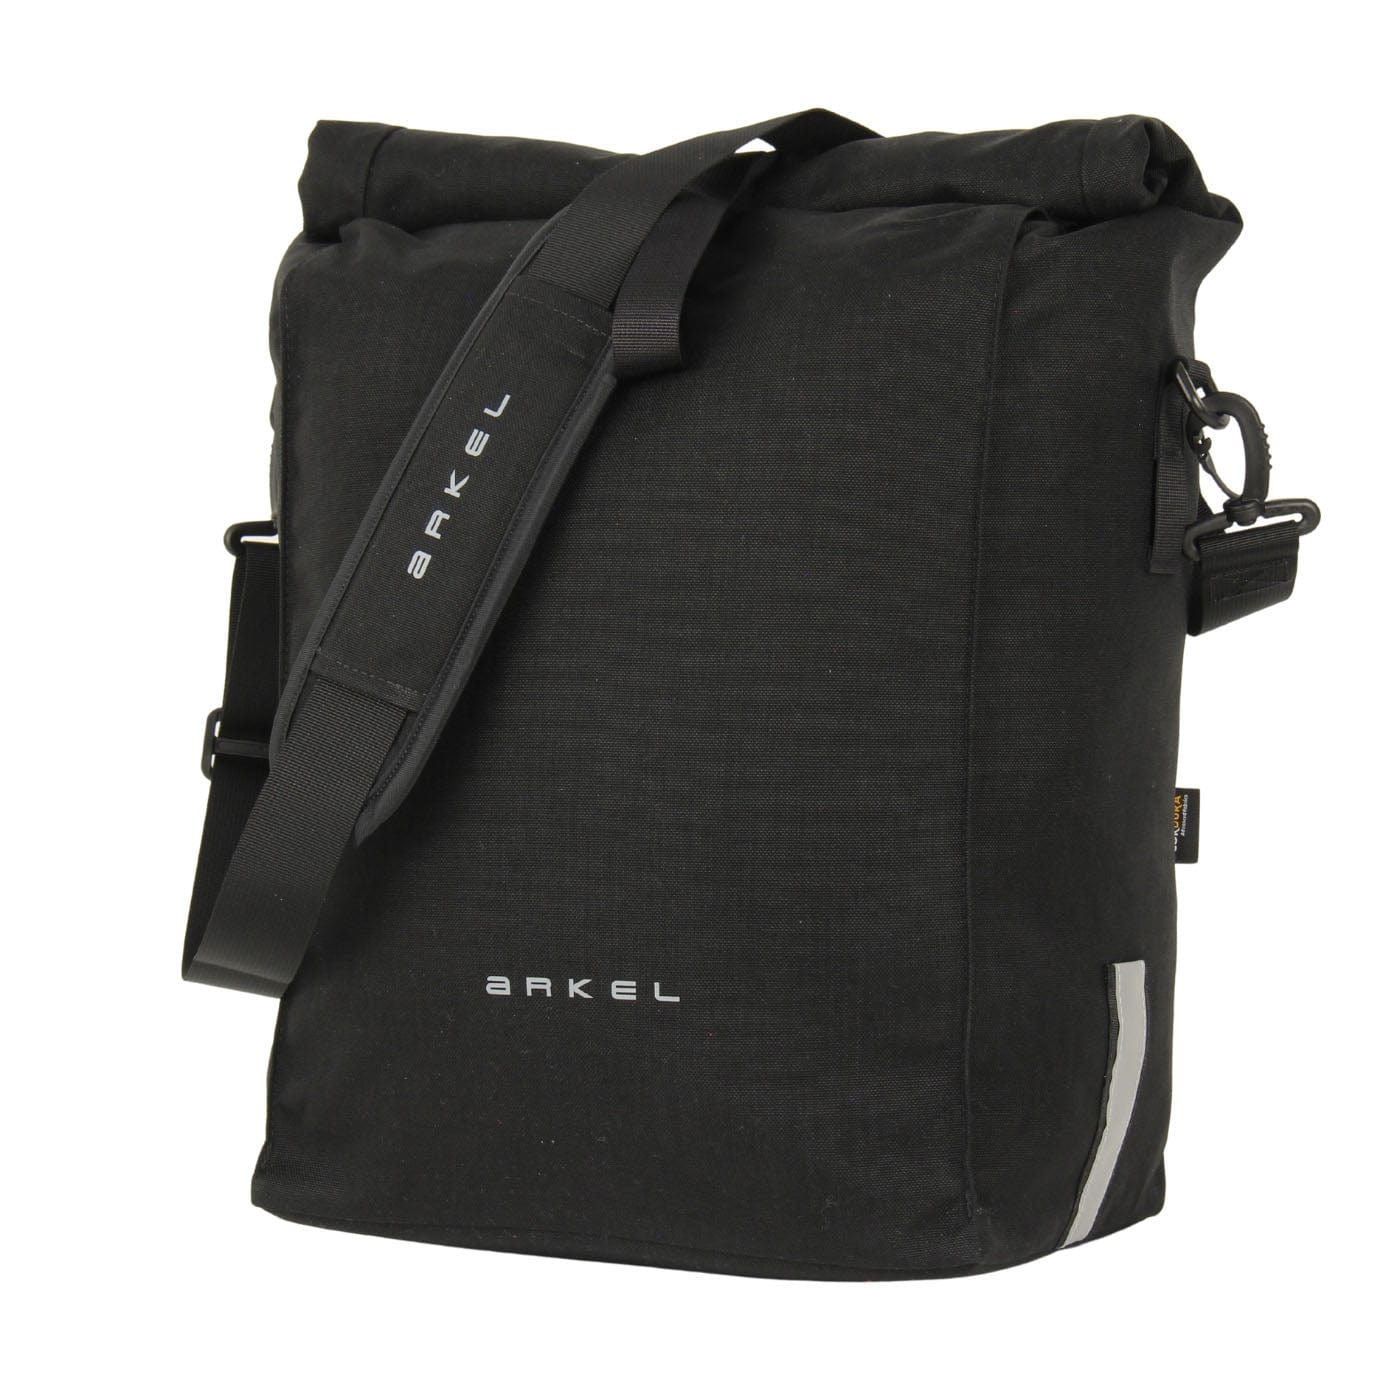 Signature V waterproof urban laptop pannier in Cordura black color with shoulder strap for off the bike transport